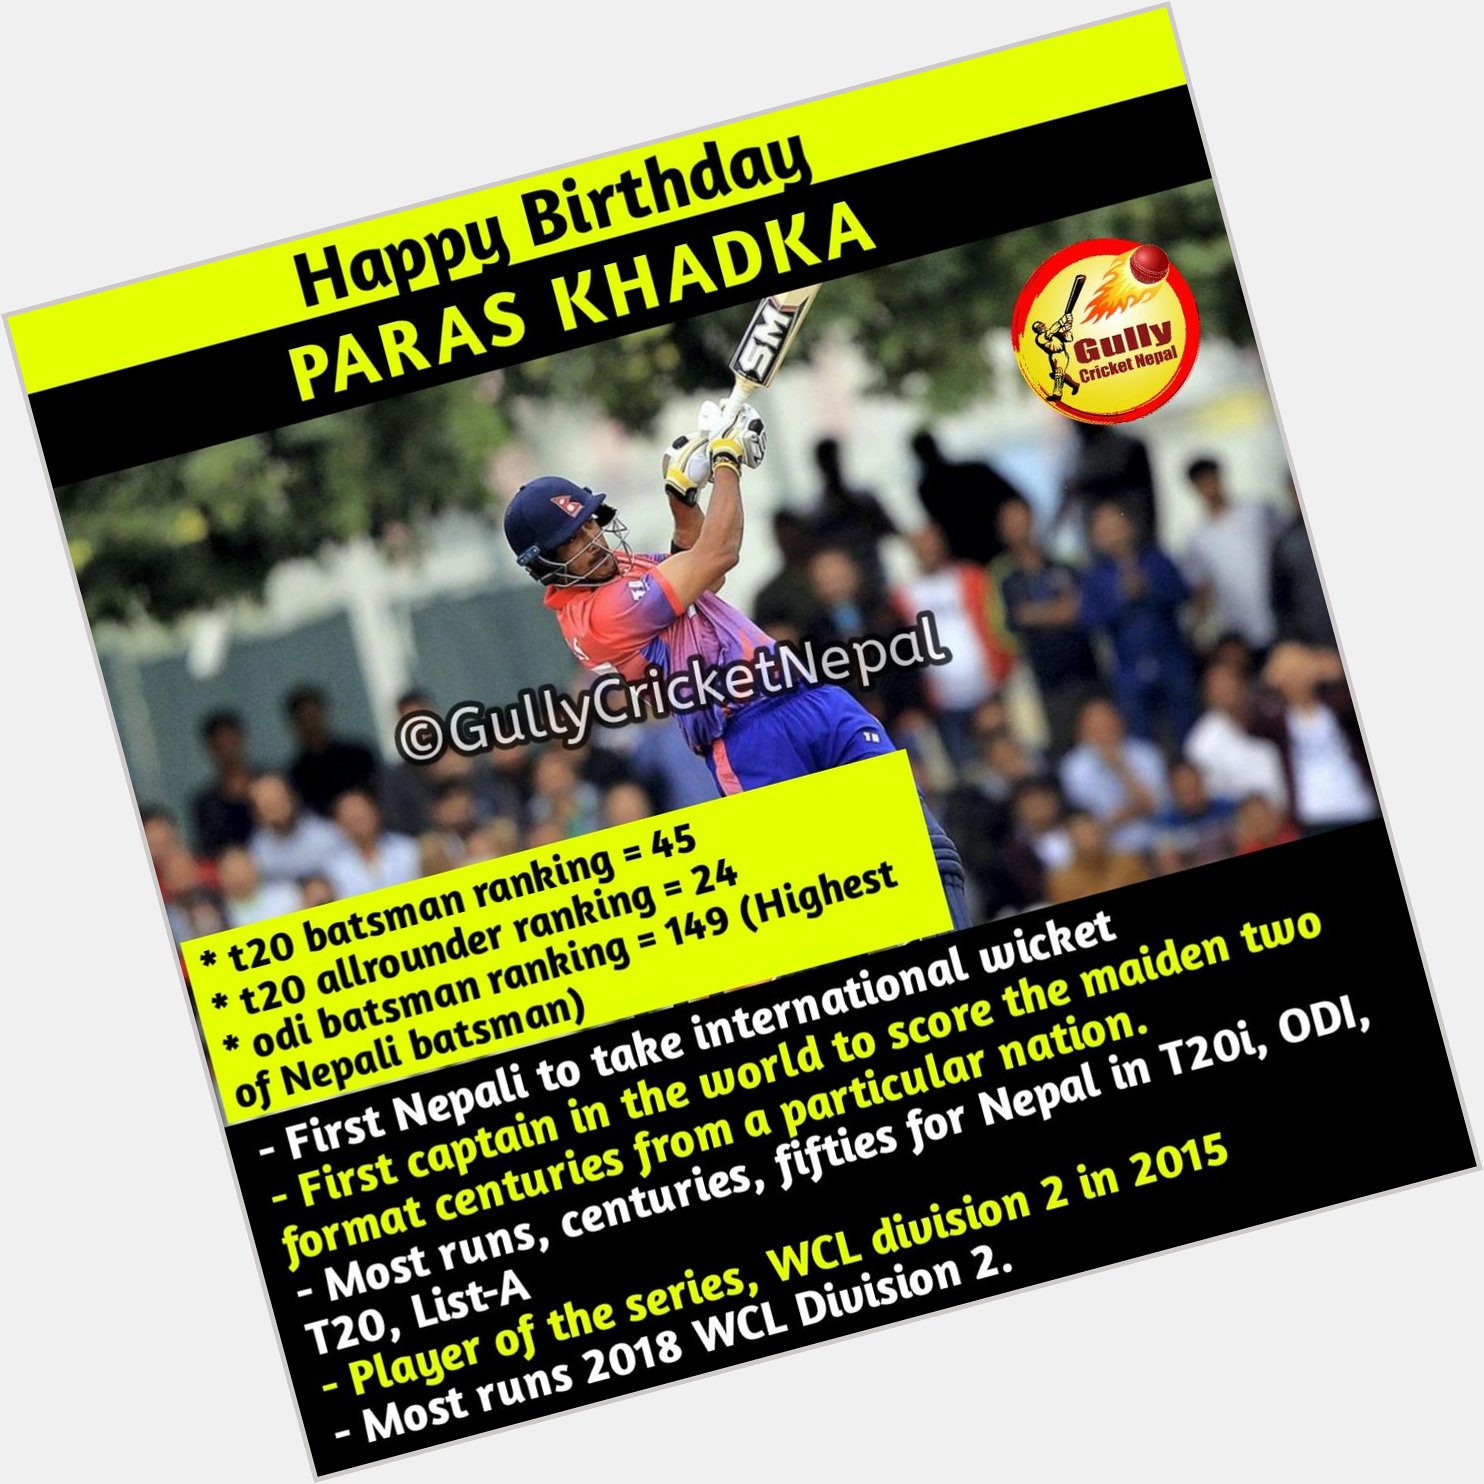 Happy birthday to Paras Khadka
* Greatest ever Batsman and Captain produced by Nepal.   